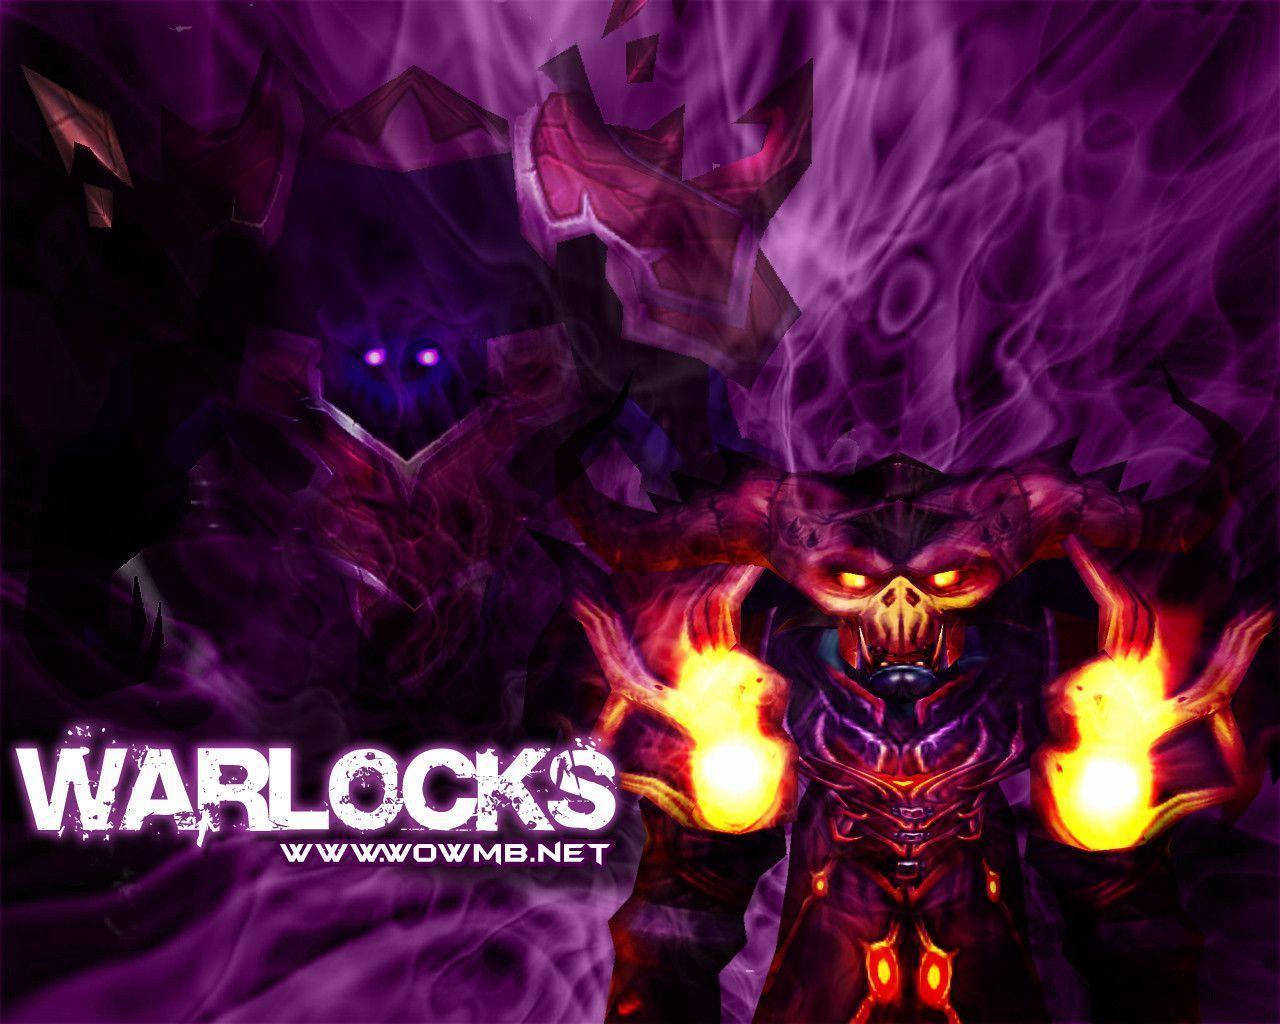 purple flames warlock made page the warlocks den wow - Image